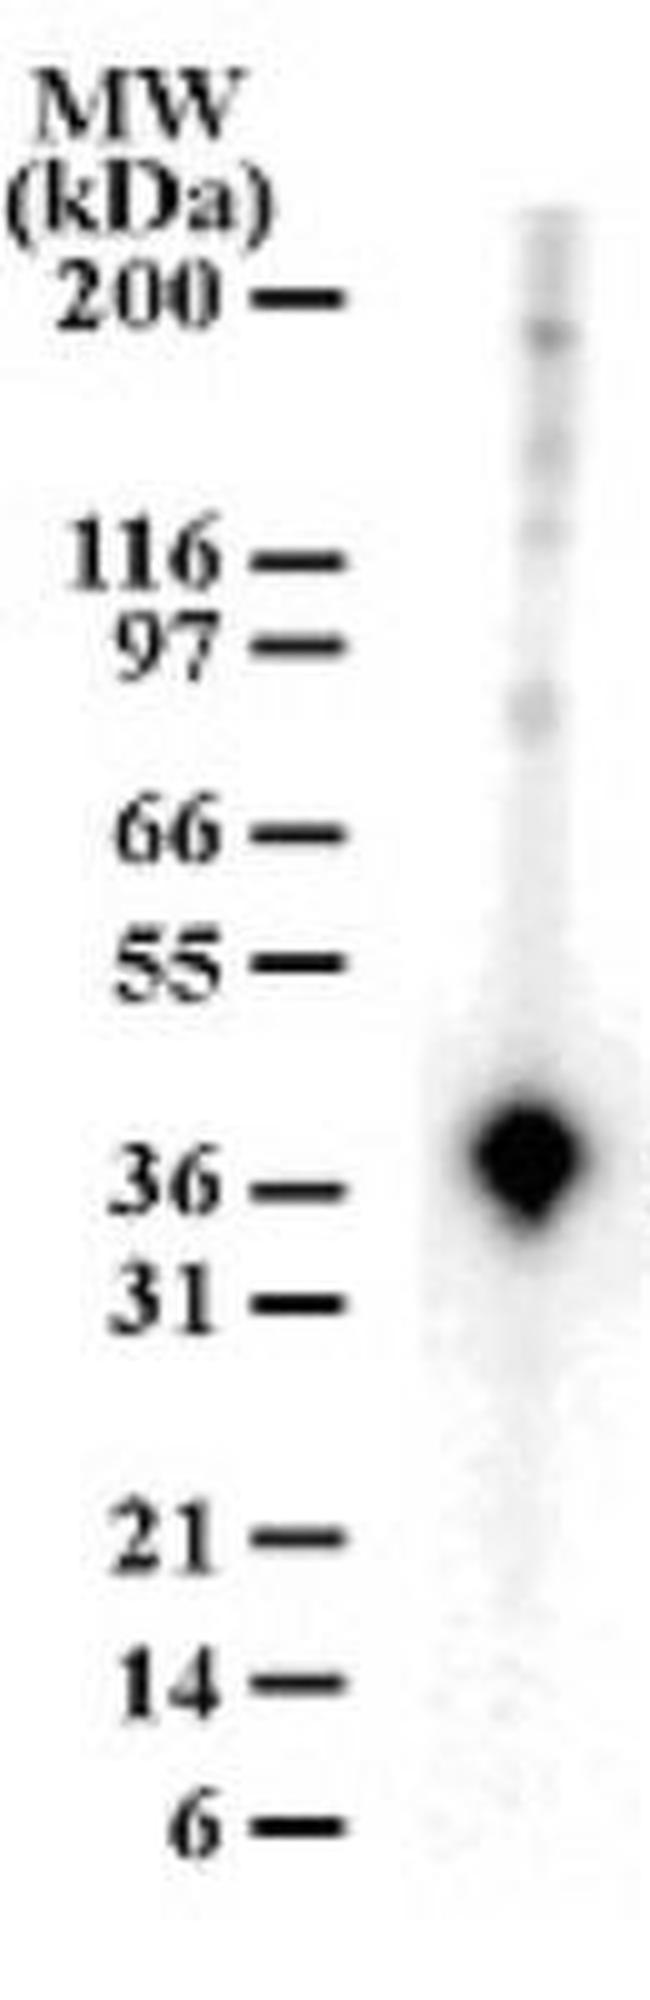 APE1 Antibody in Western Blot (WB)